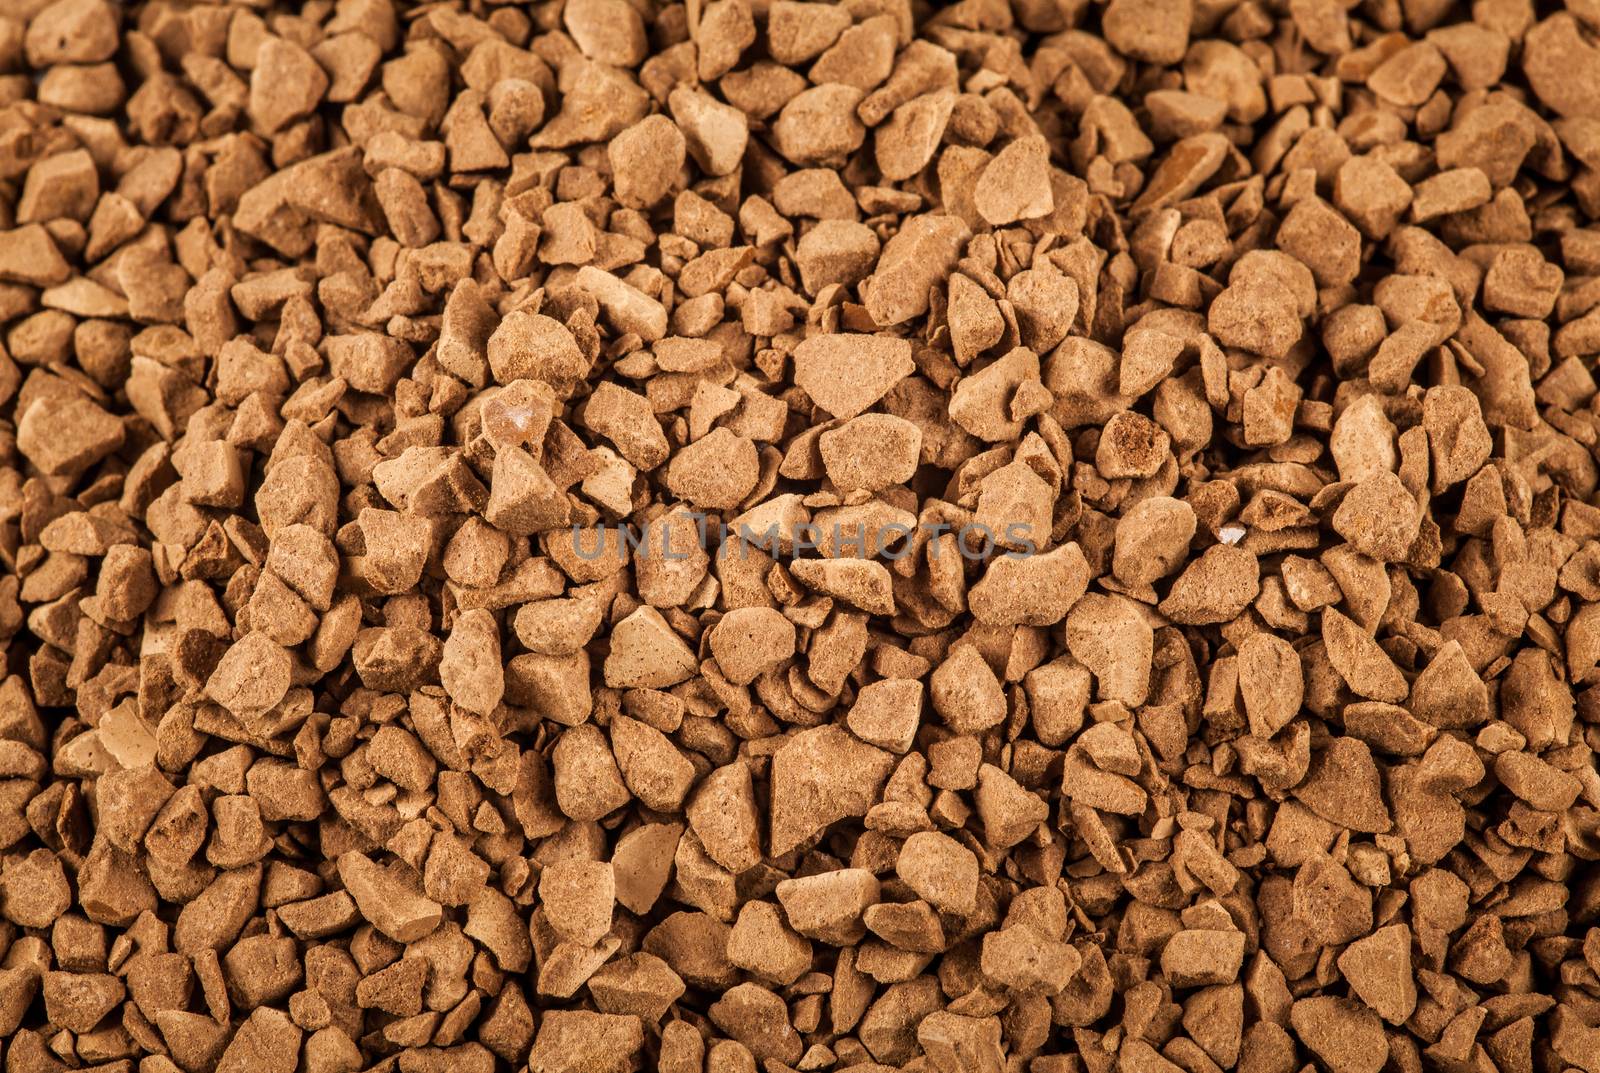 Soluble coffee granules by fogen